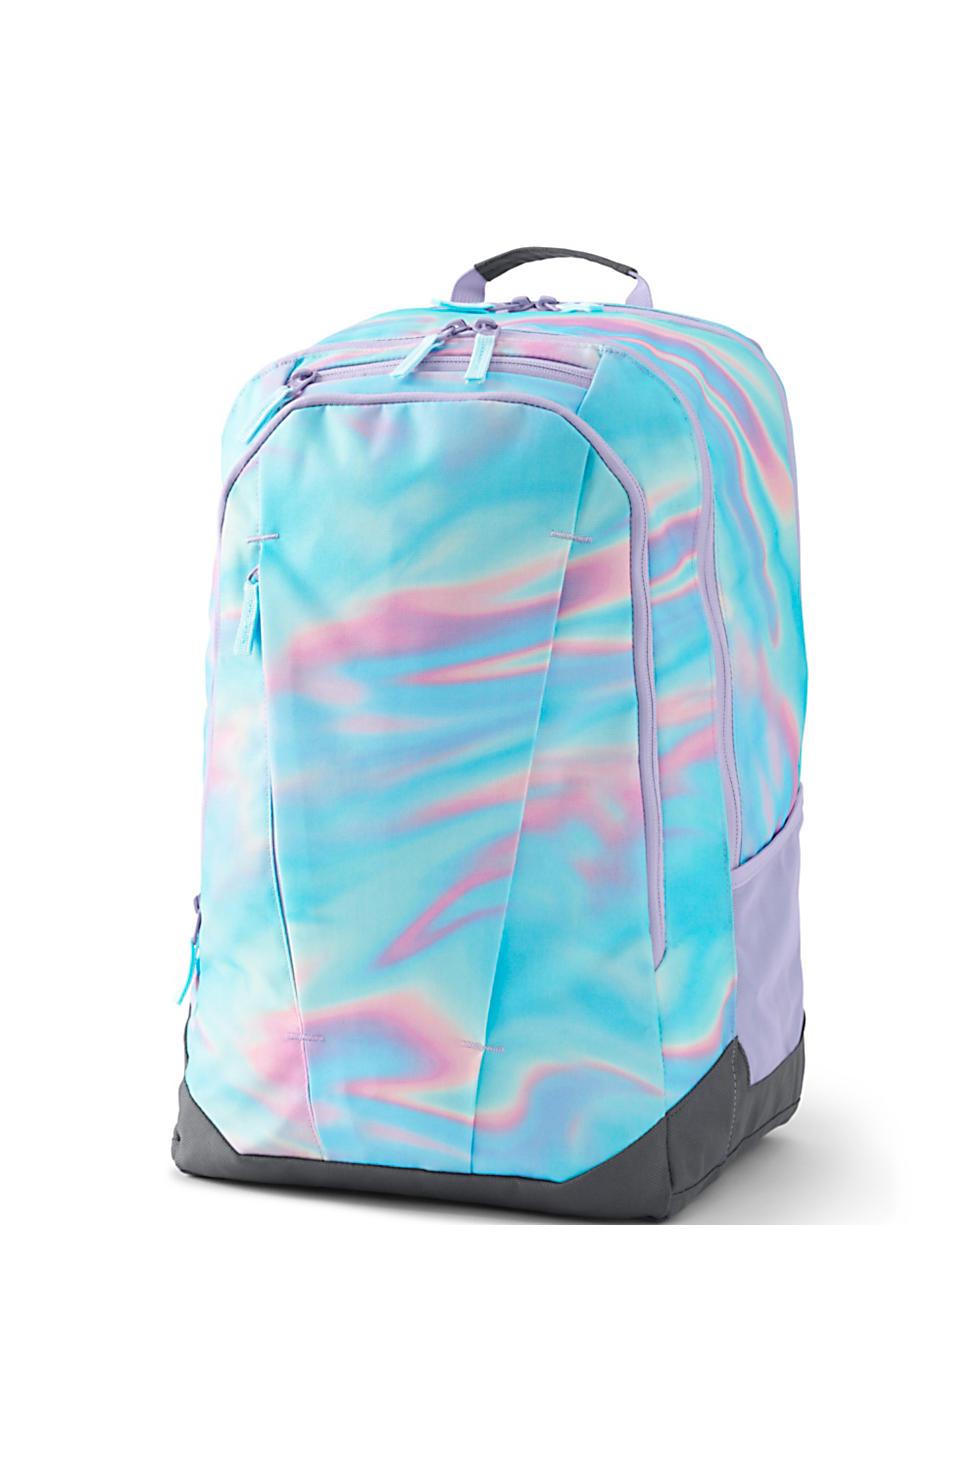 Lands End Kids TechPack Extra Large Backpack (Mermaid Multi Swirl)